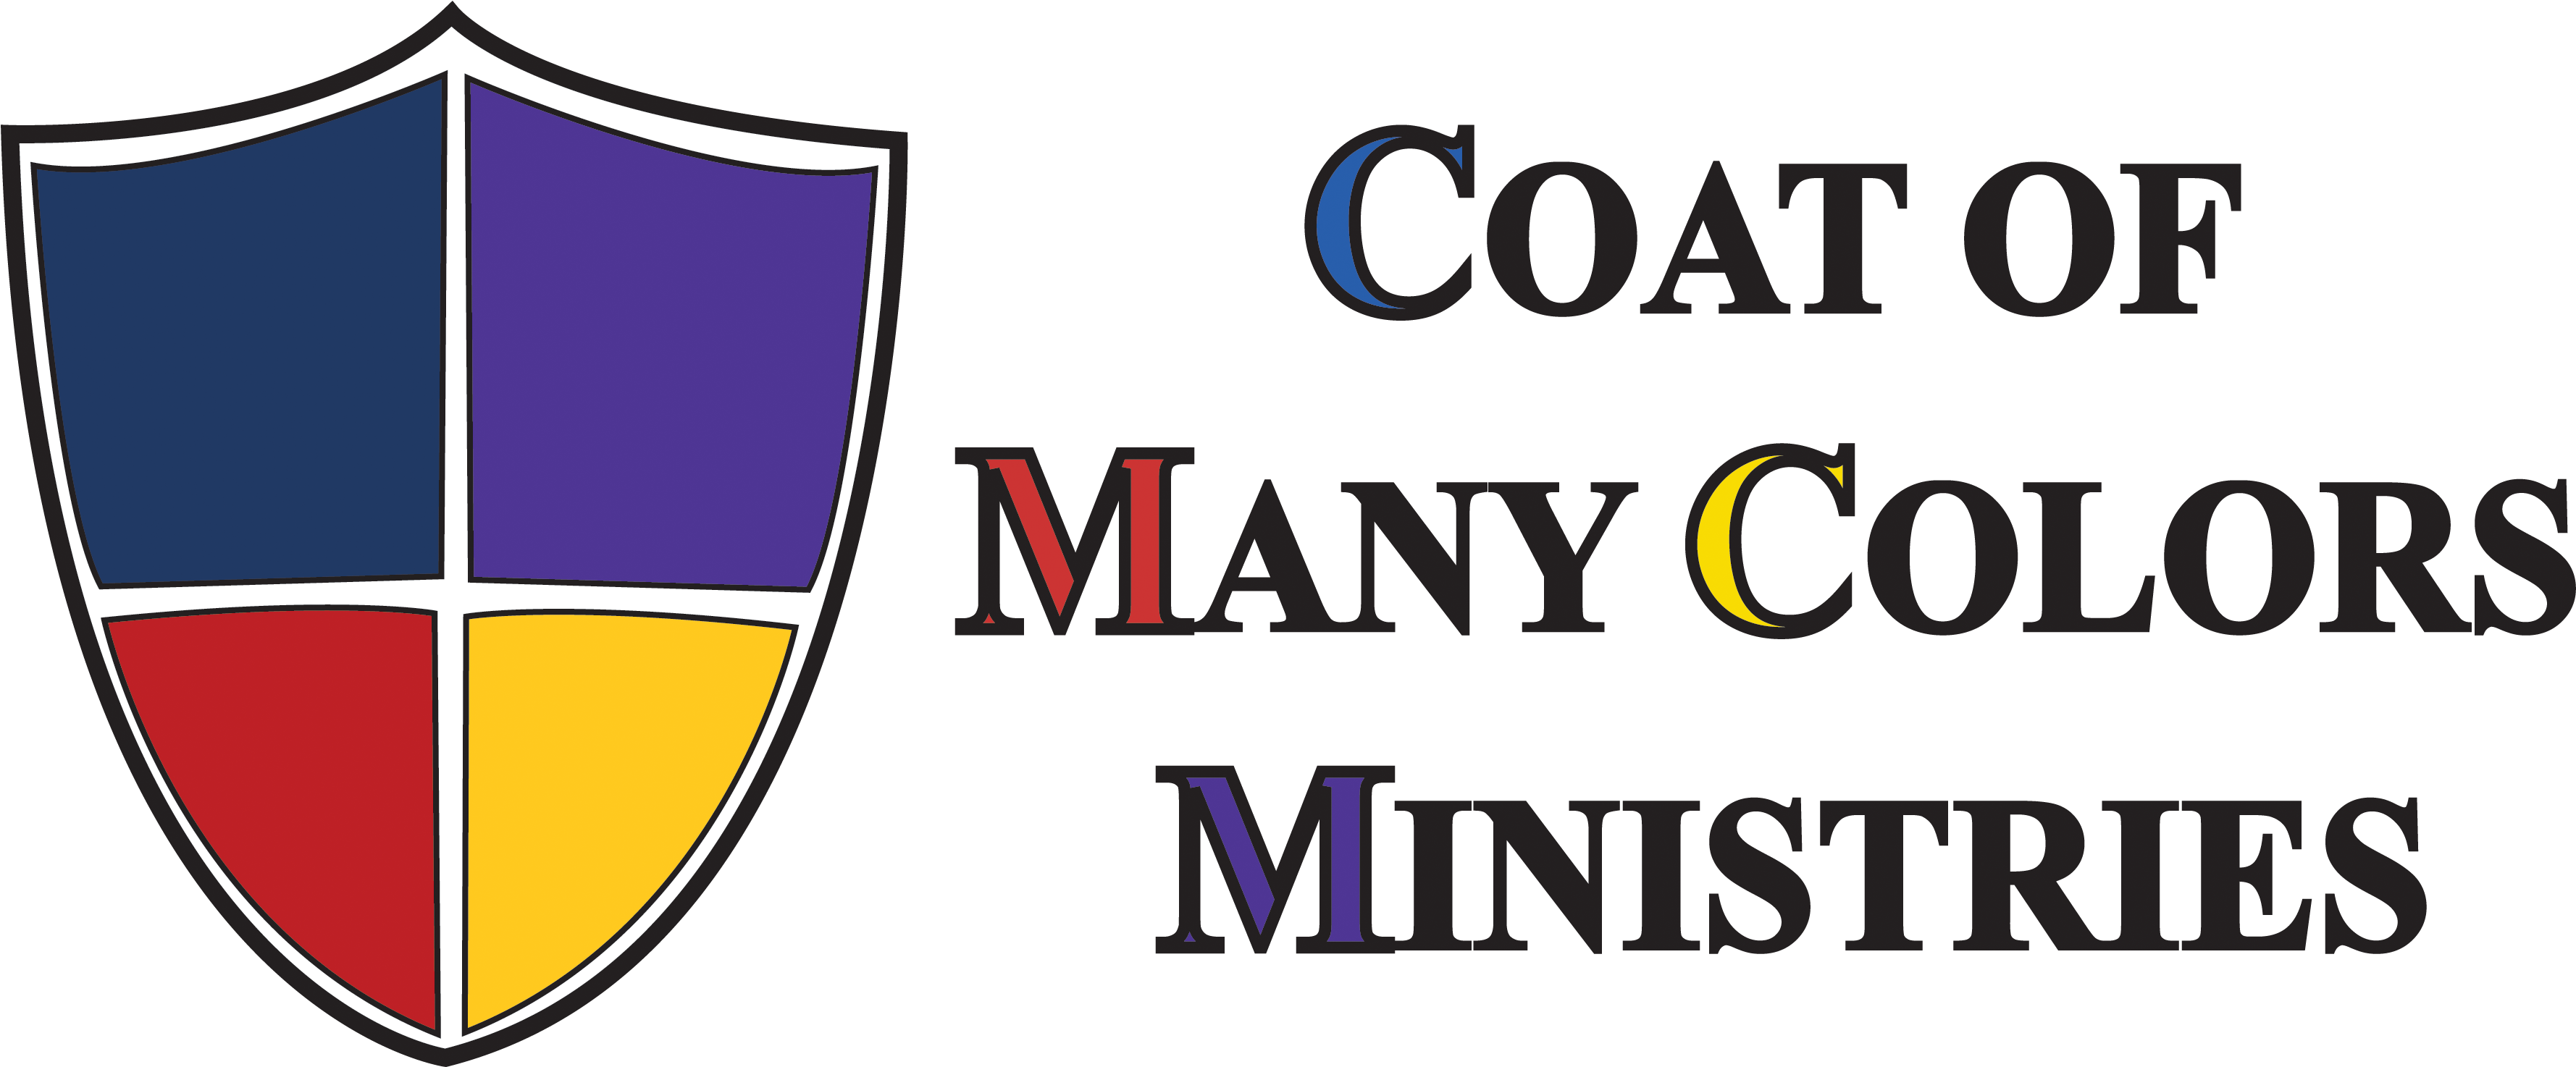 Coat Of Many Colors Ministries, Inc - Coat Of Many Colors Ministries (3900x1800)